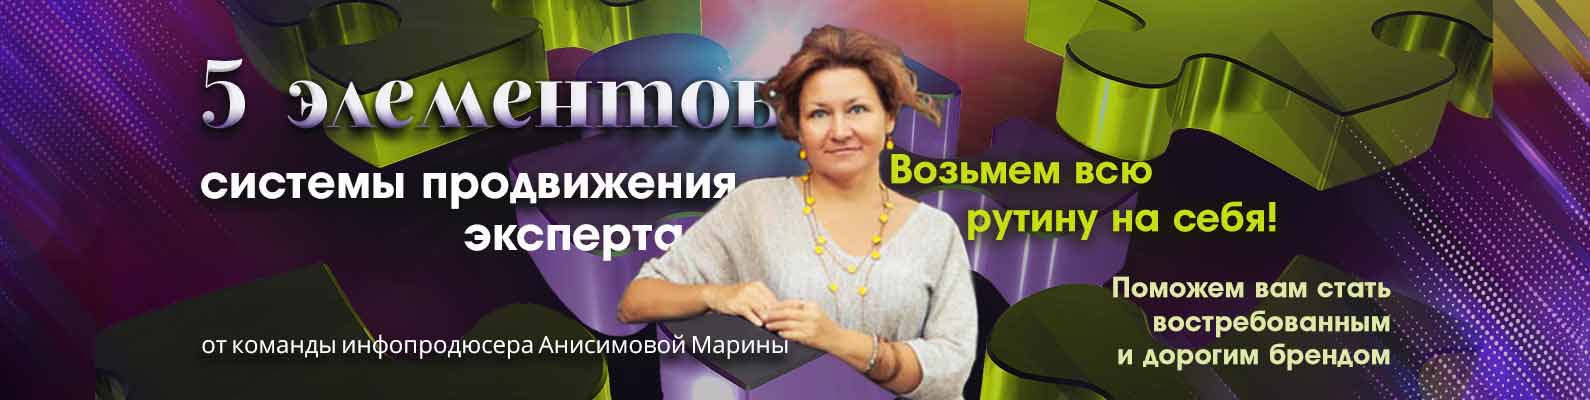 Марина Анисимова баннер